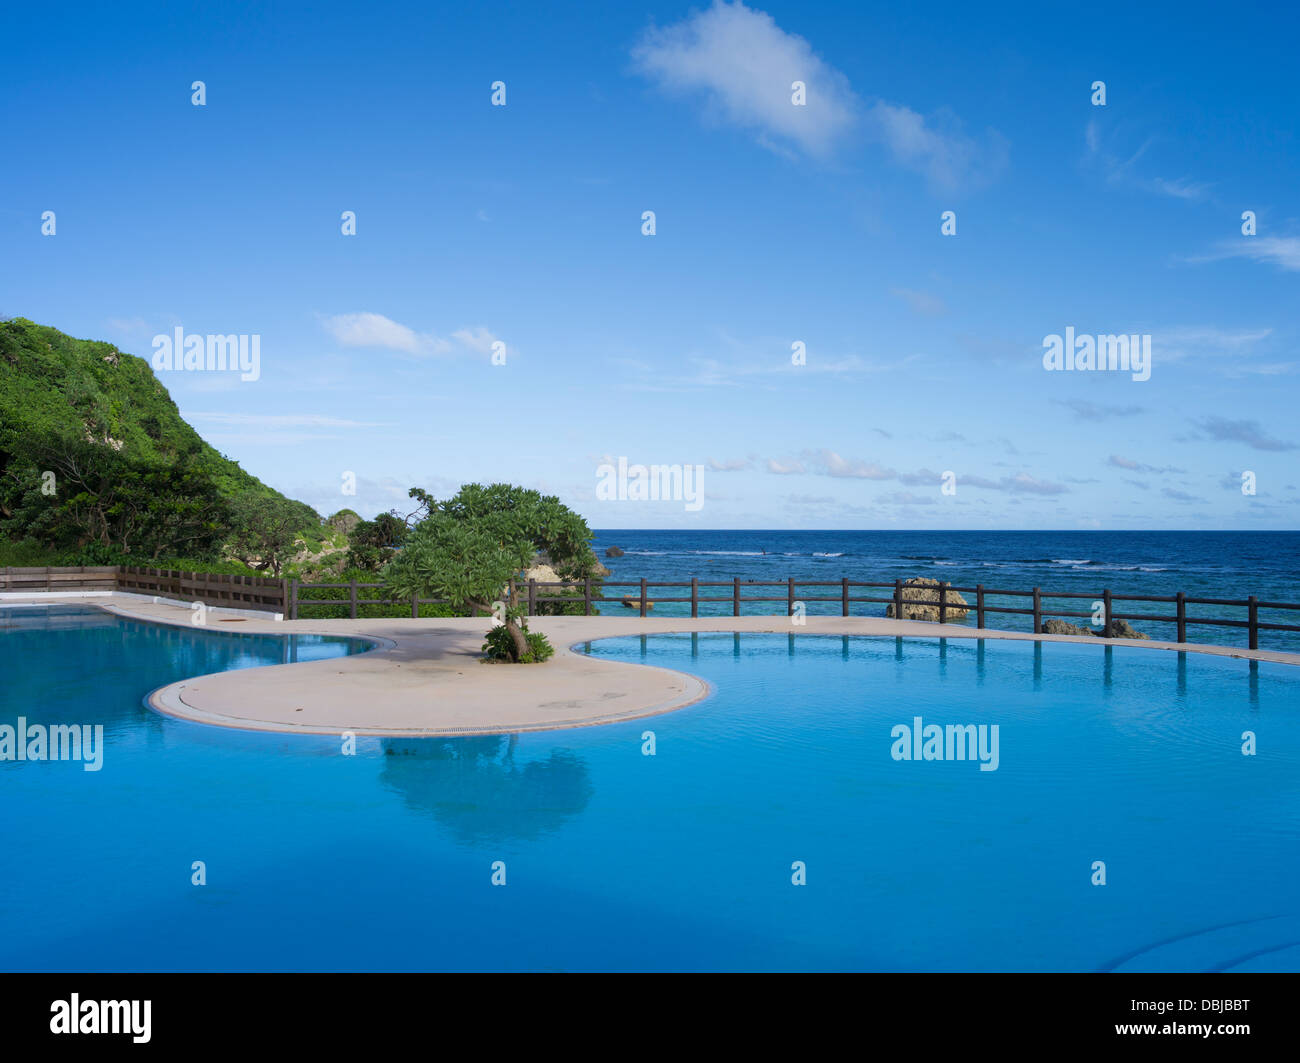 Japan Miyako Island High Resolution Stock Photography And Images Alamy